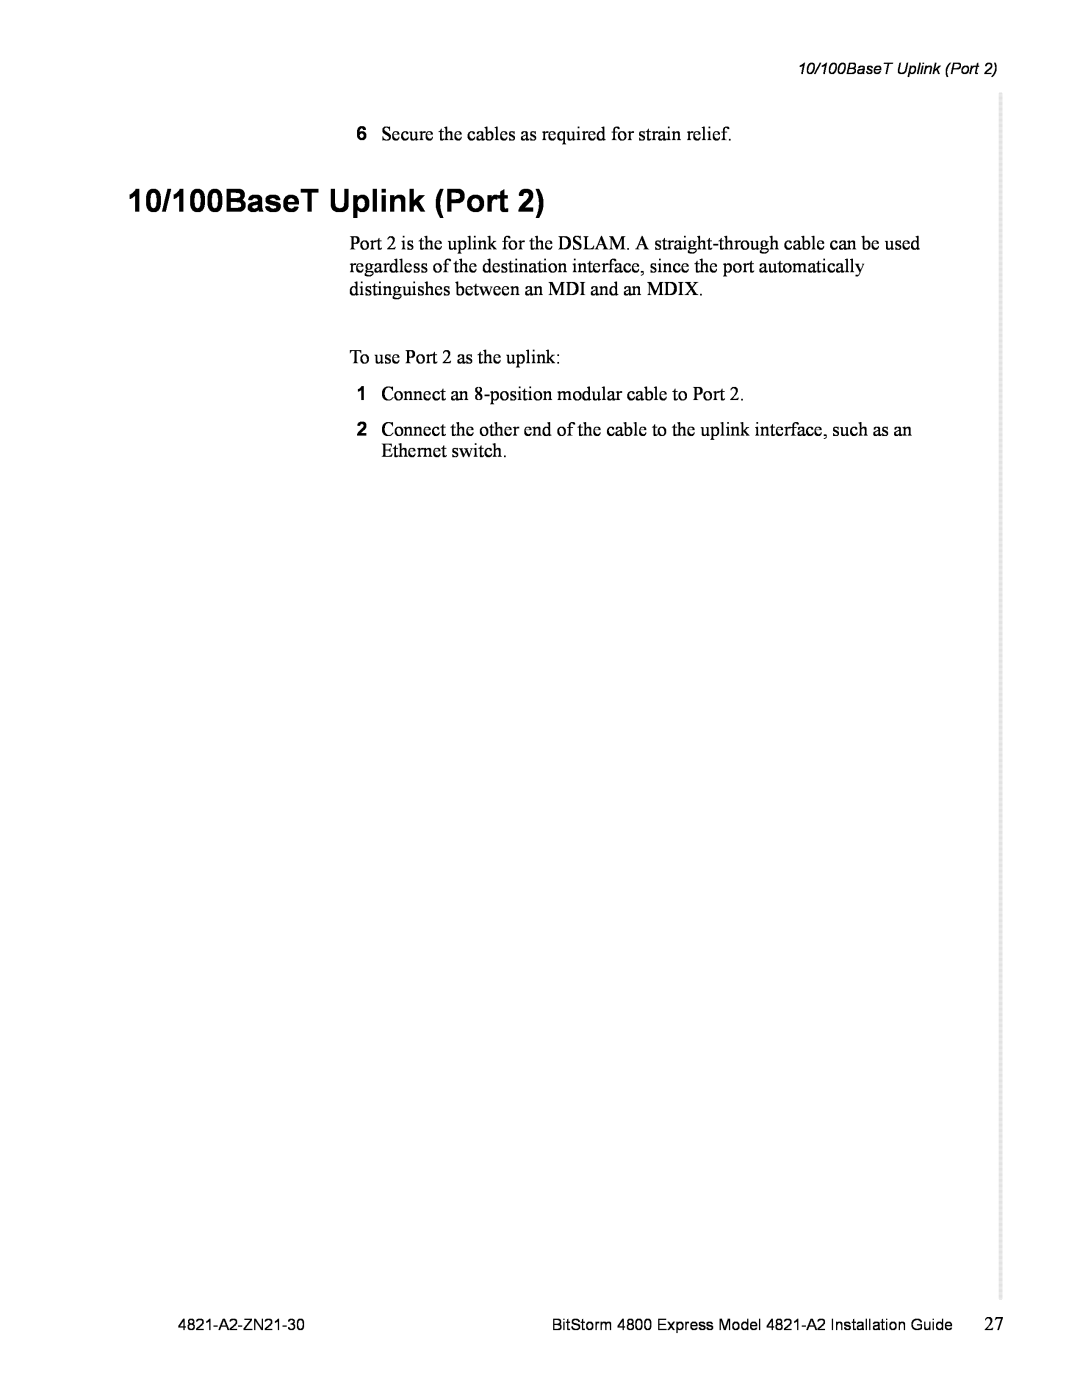 Zhone Technologies 4821-A2 manual 10/100BaseT Uplink Port 